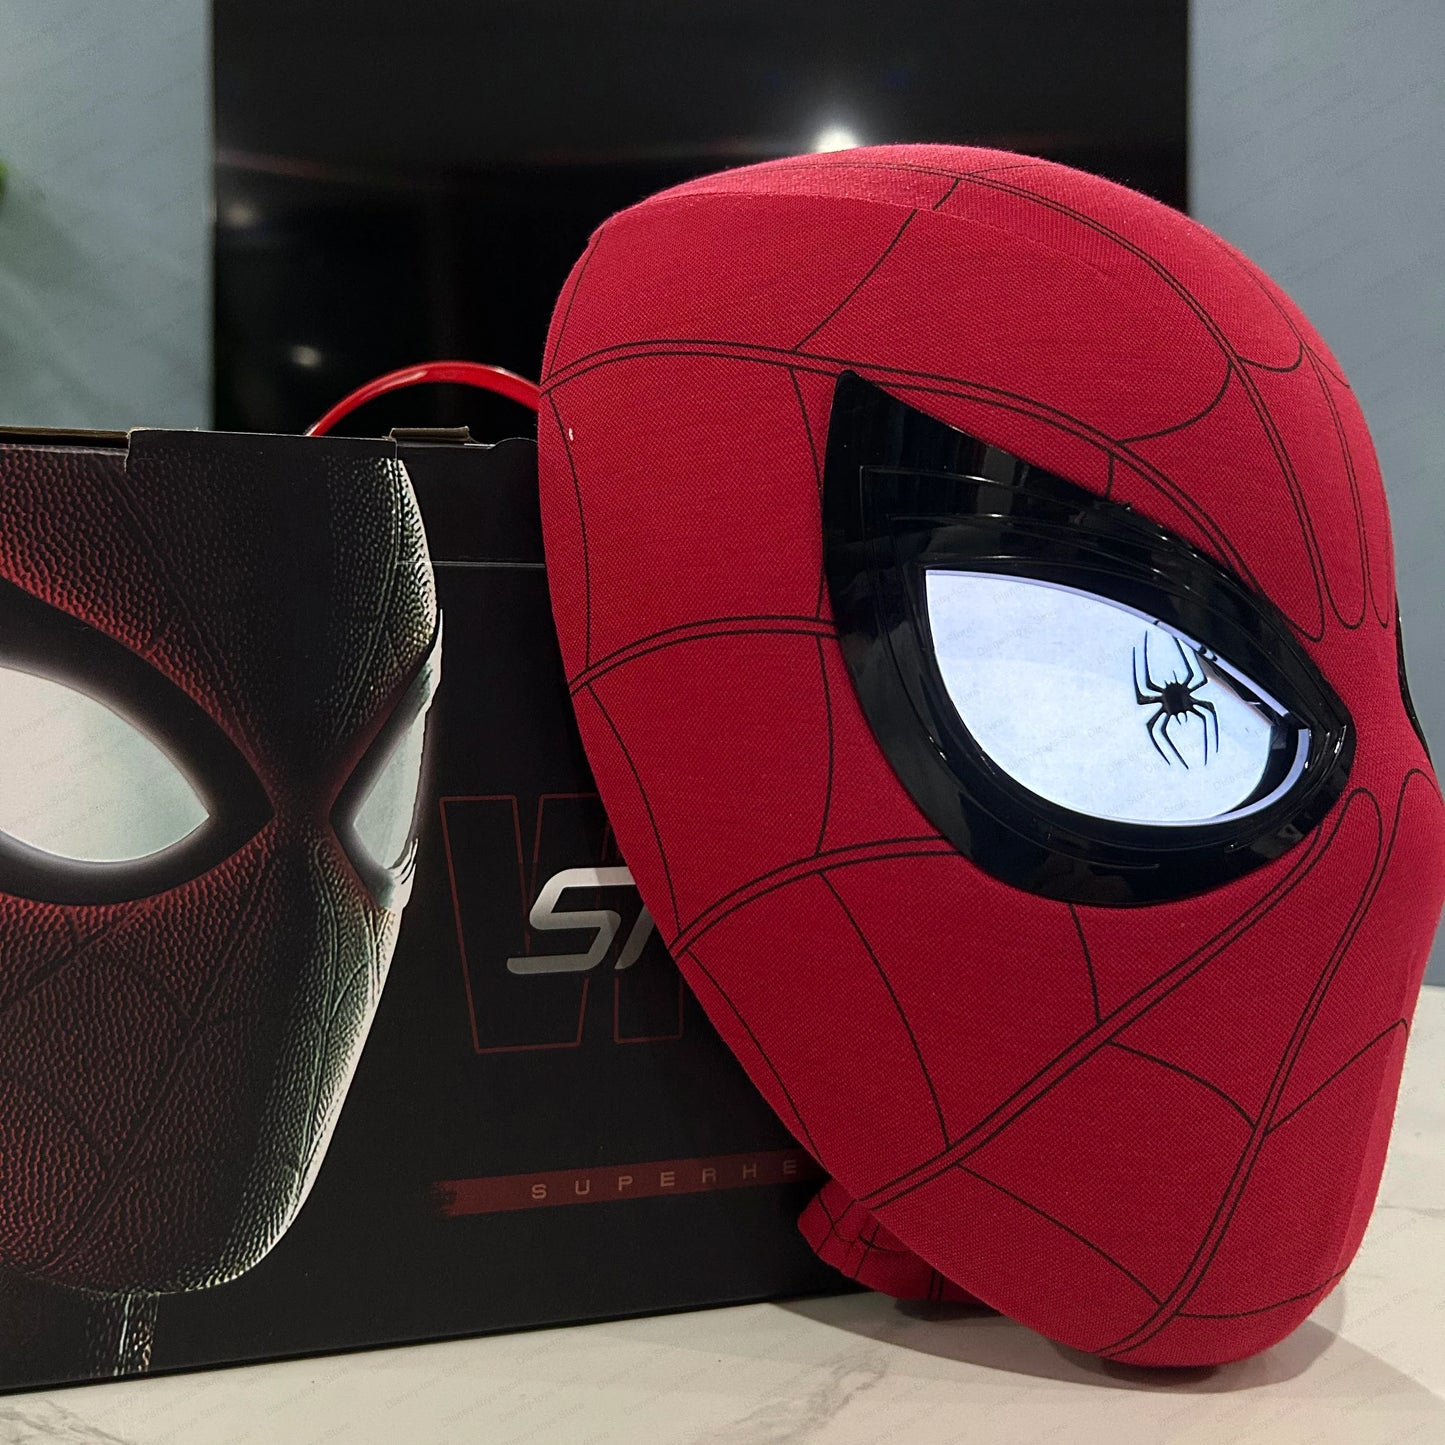 Spiderman blinking eye mask Ring version